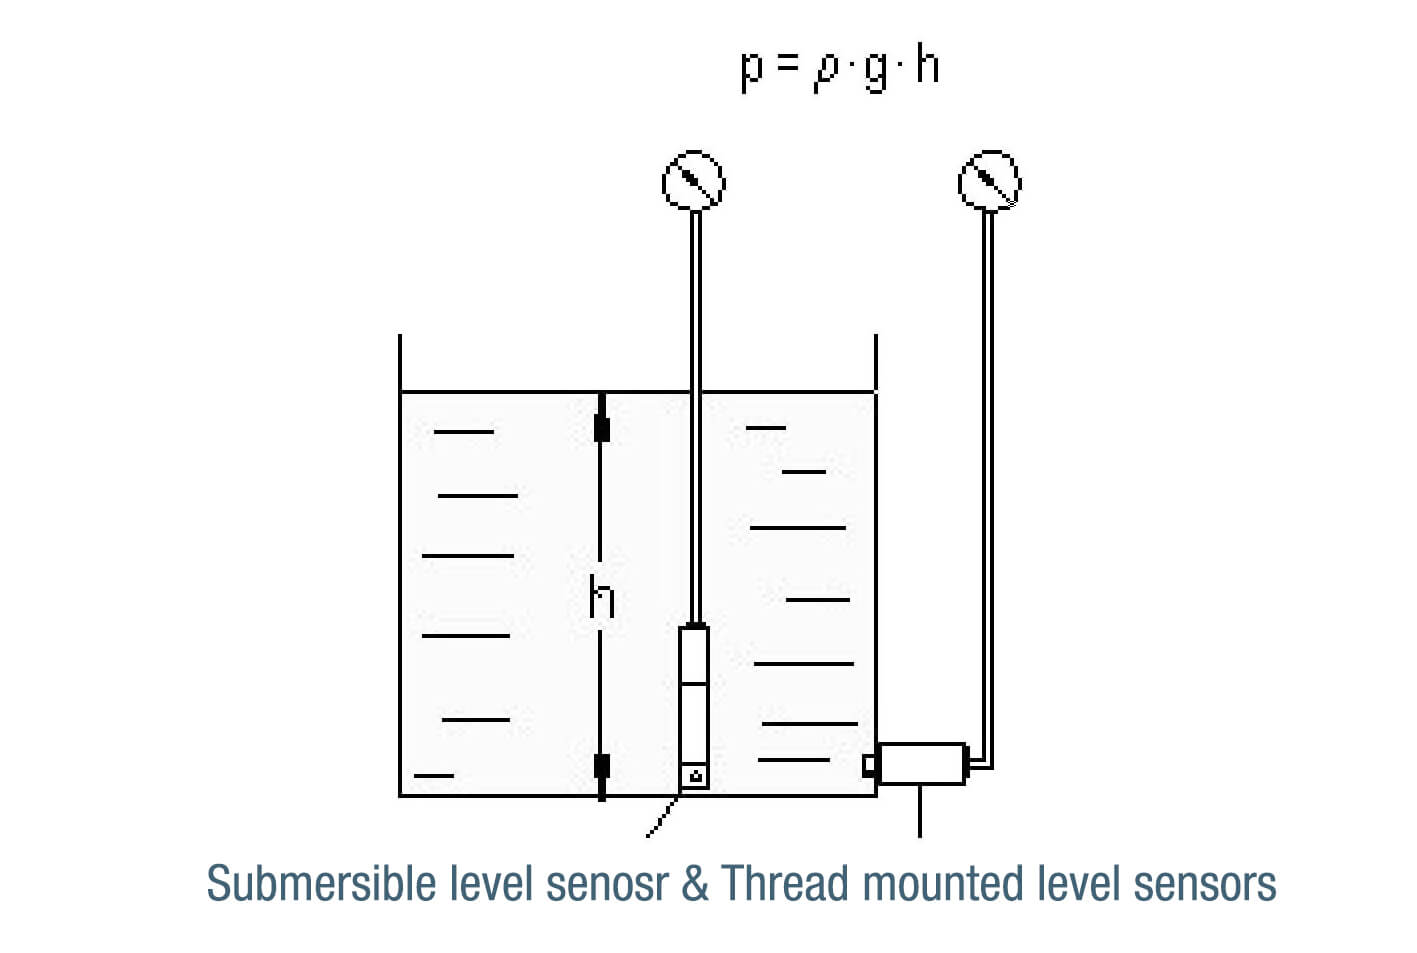 Submersible level senosr & Thread mounted level sensors